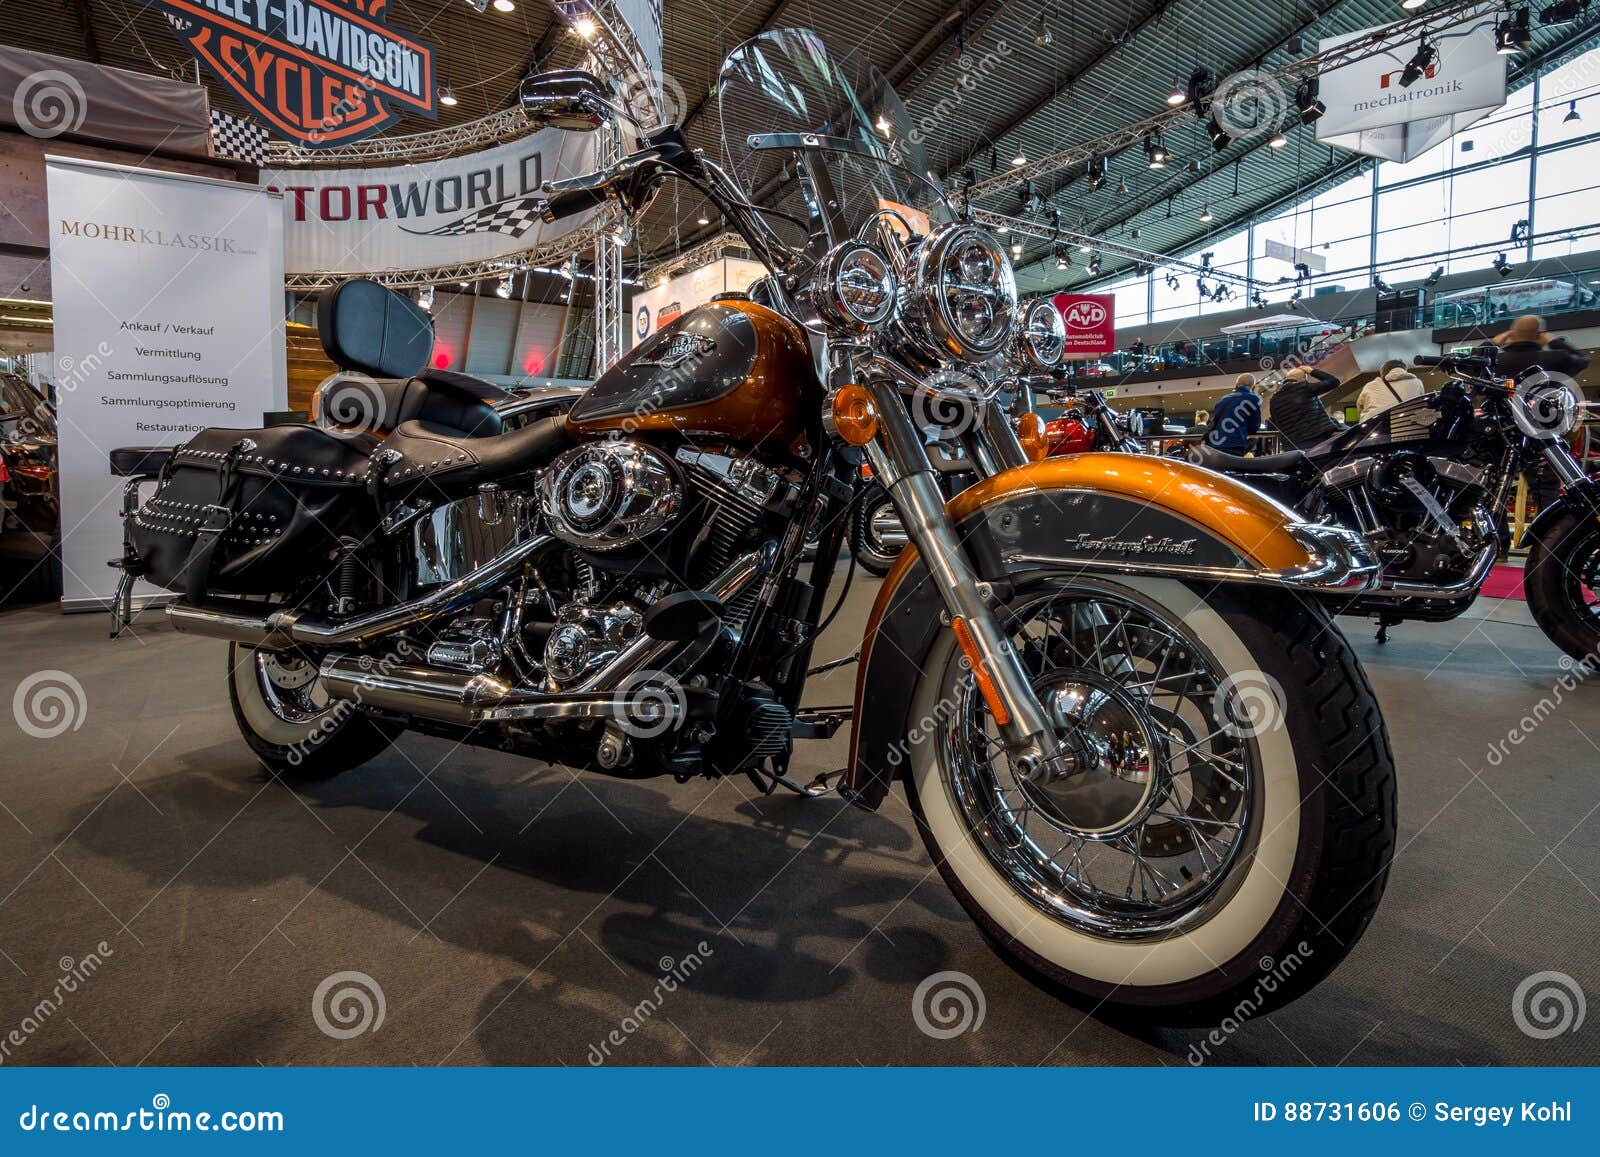 Motorcycle Harley Davidson Heritage Softail 2015 Editorial Photo Image Of Luxury Motorbike 88731606